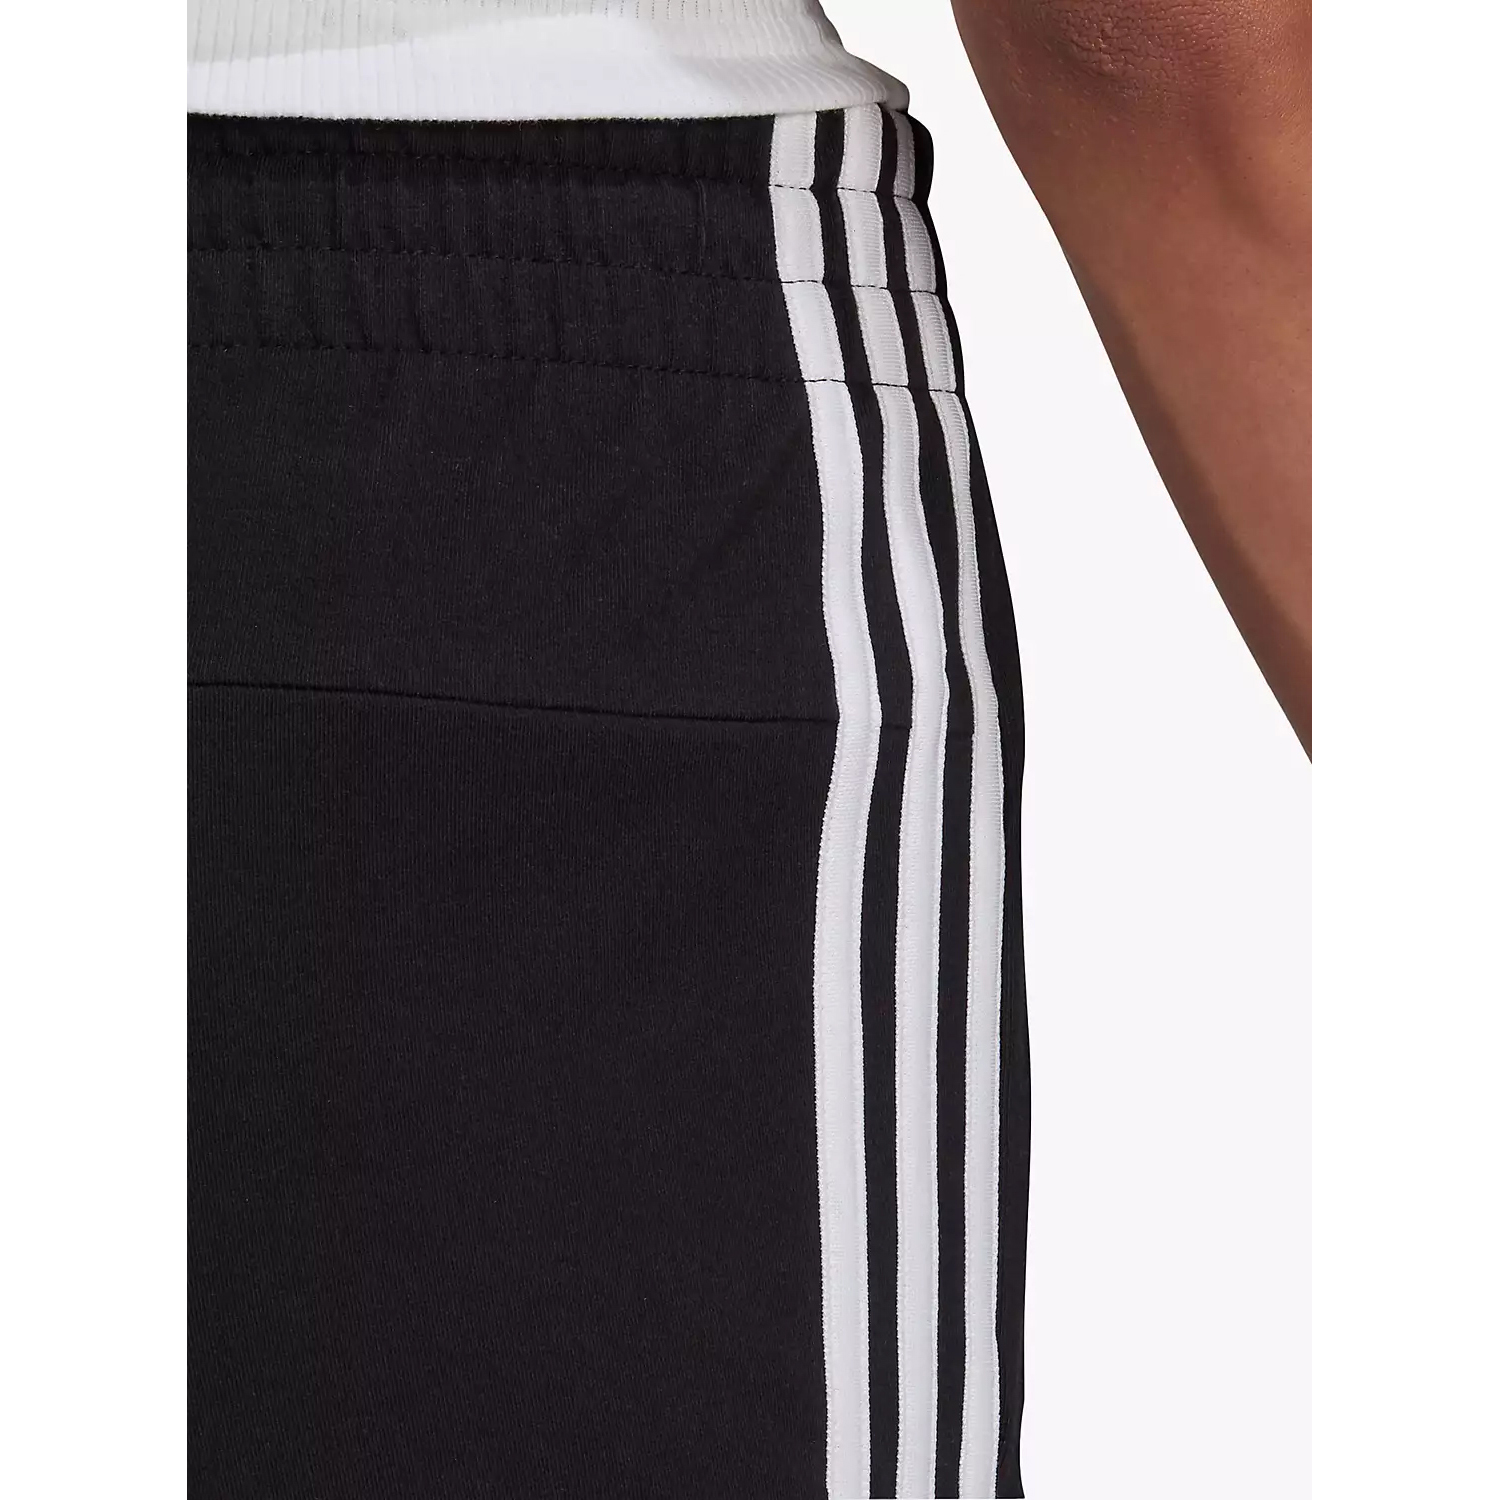 Women Black Side 3 Stripes Shorts